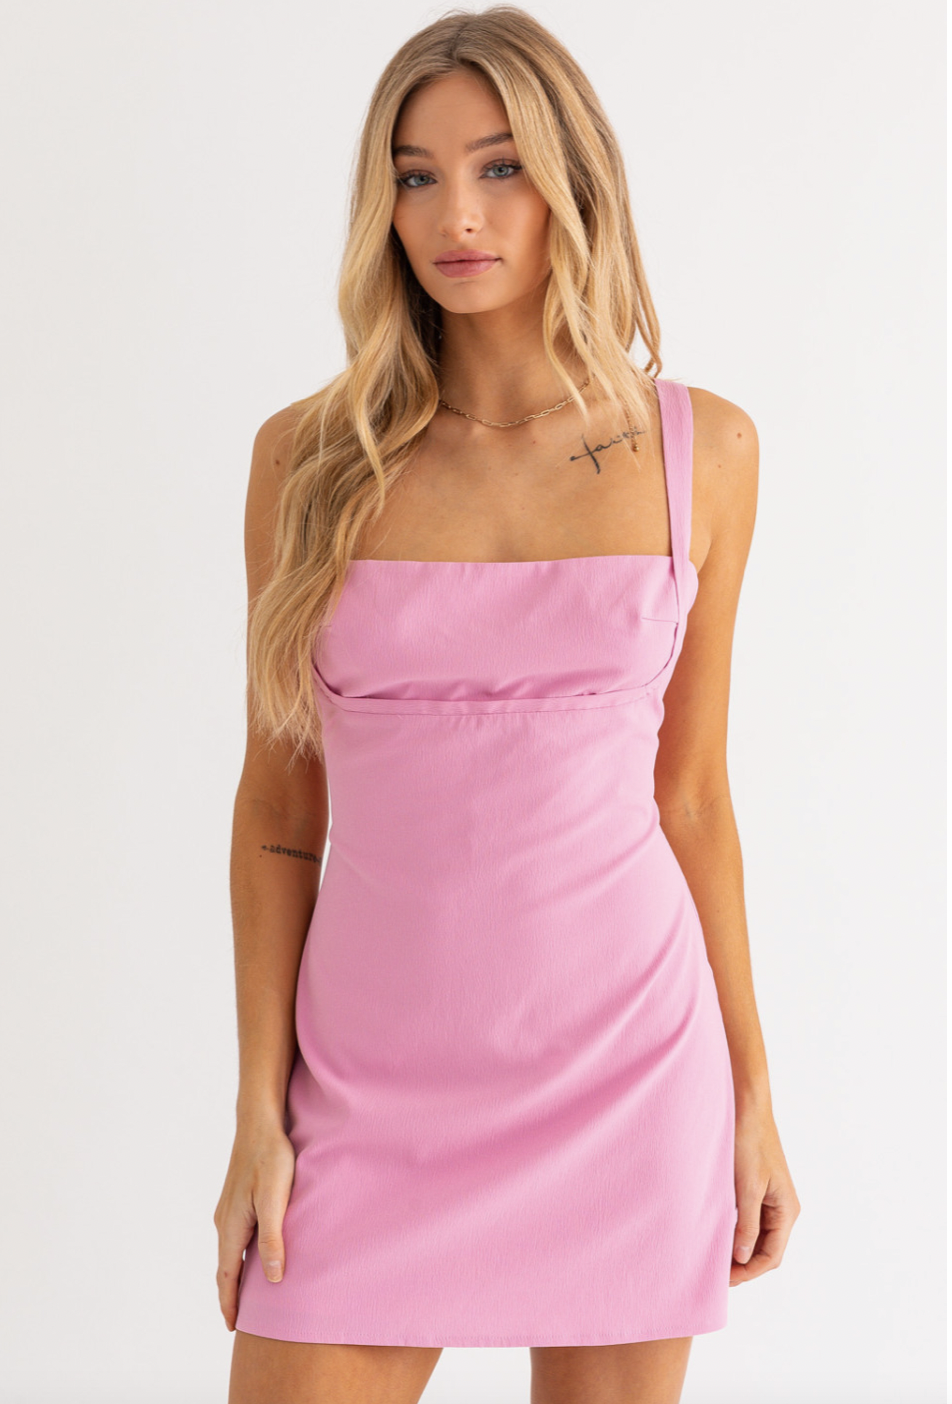 Think Pink Dress